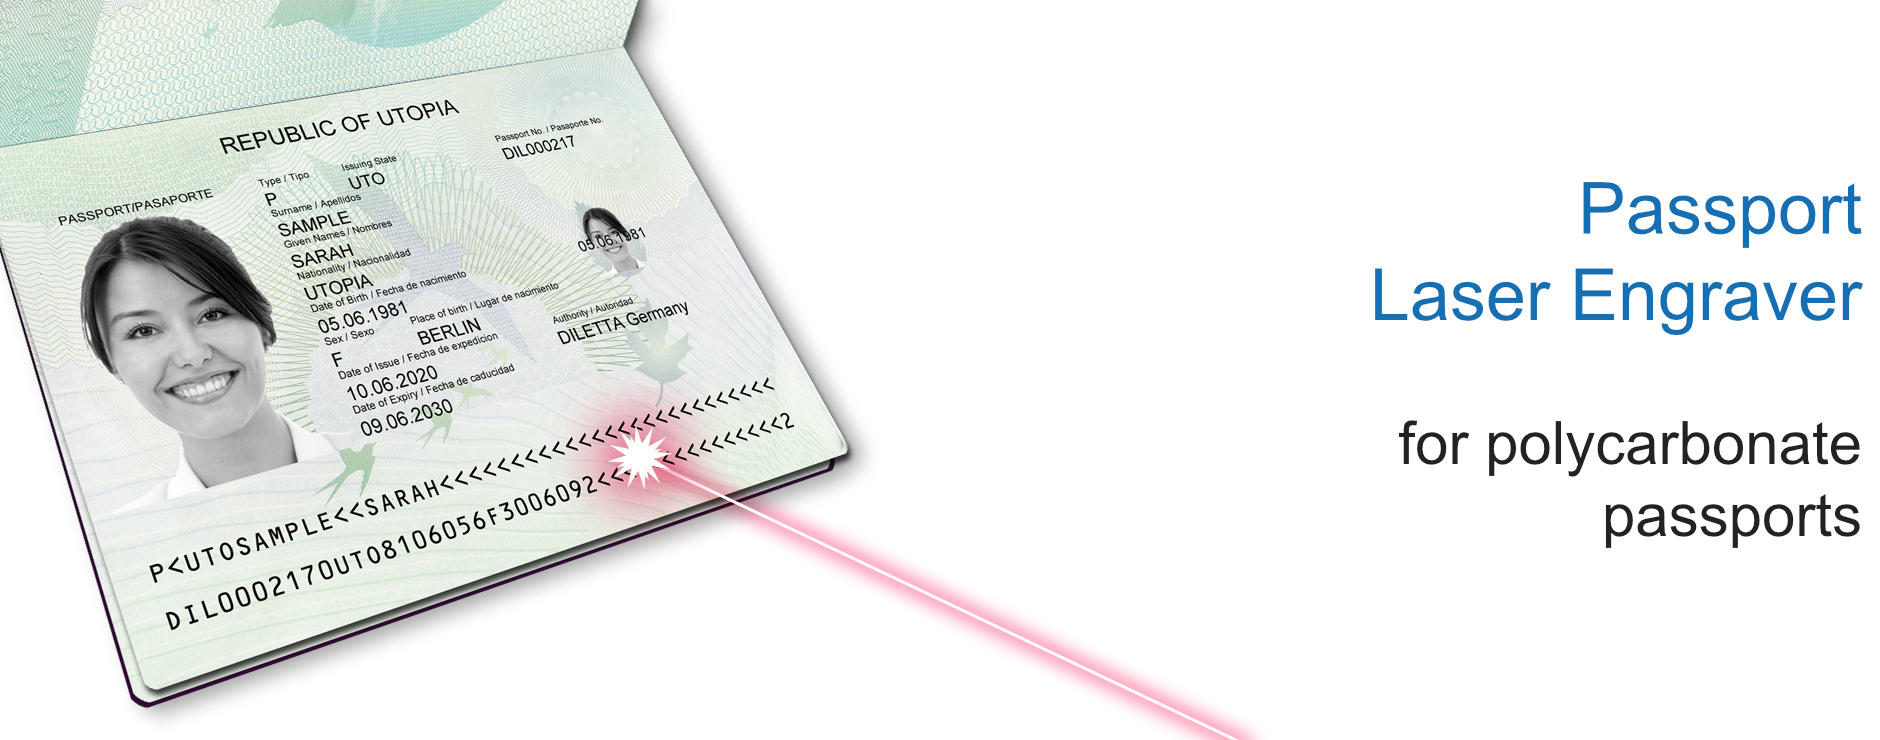 Passport Laser Engraver